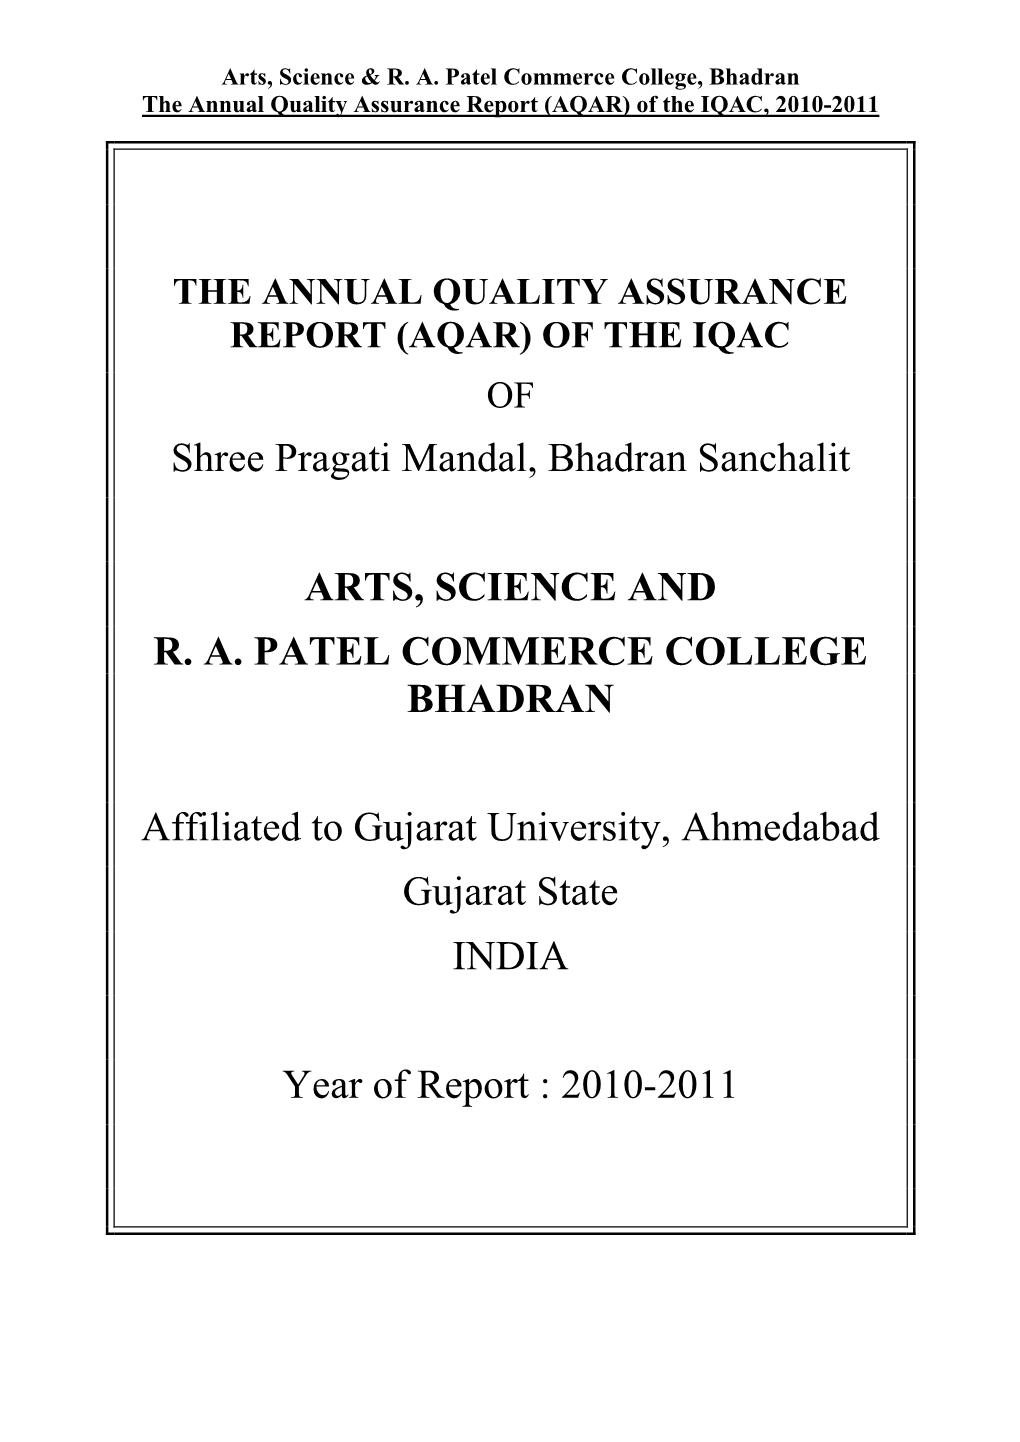 Shree Pragati Mandal, Bhadran Sanchalit ARTS, SCIENCE and R. A. PATEL COMMERCE COLLEGE BHADRAN Affiliated to Gujarat University